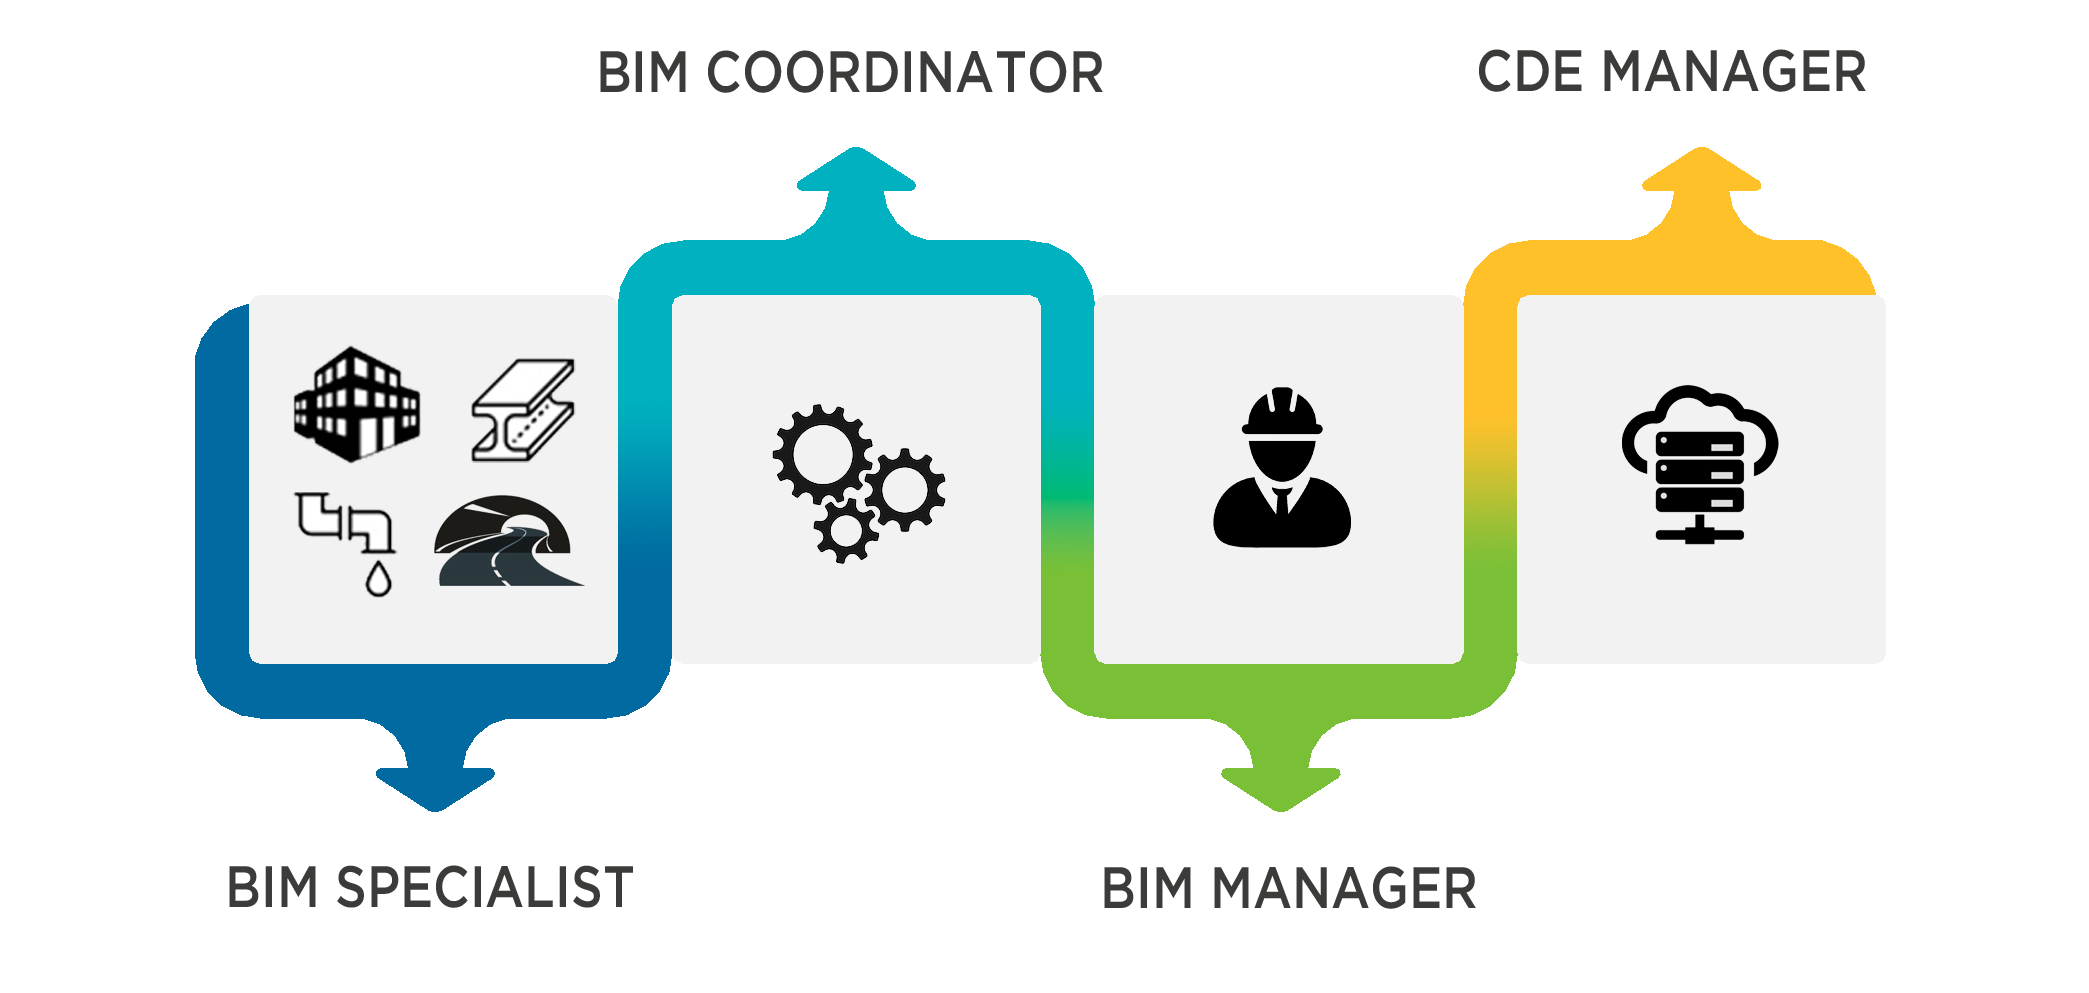 Certificazioni BIM specialist coordinator manager CDE